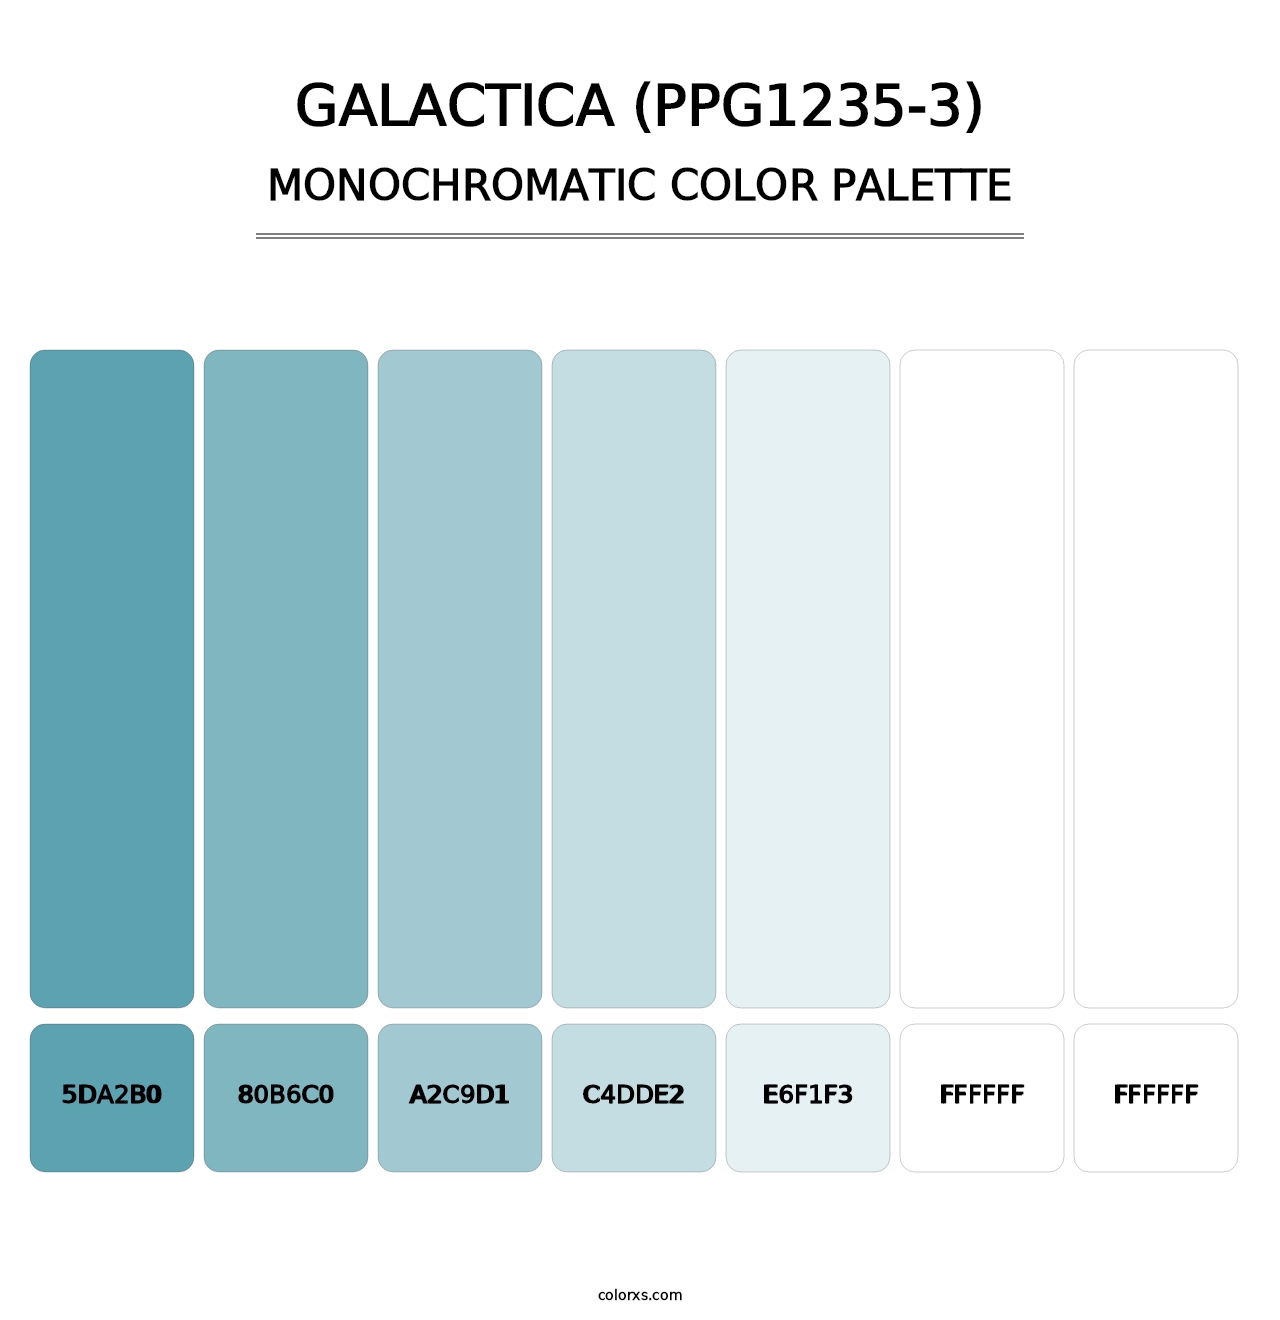 Galactica (PPG1235-3) - Monochromatic Color Palette